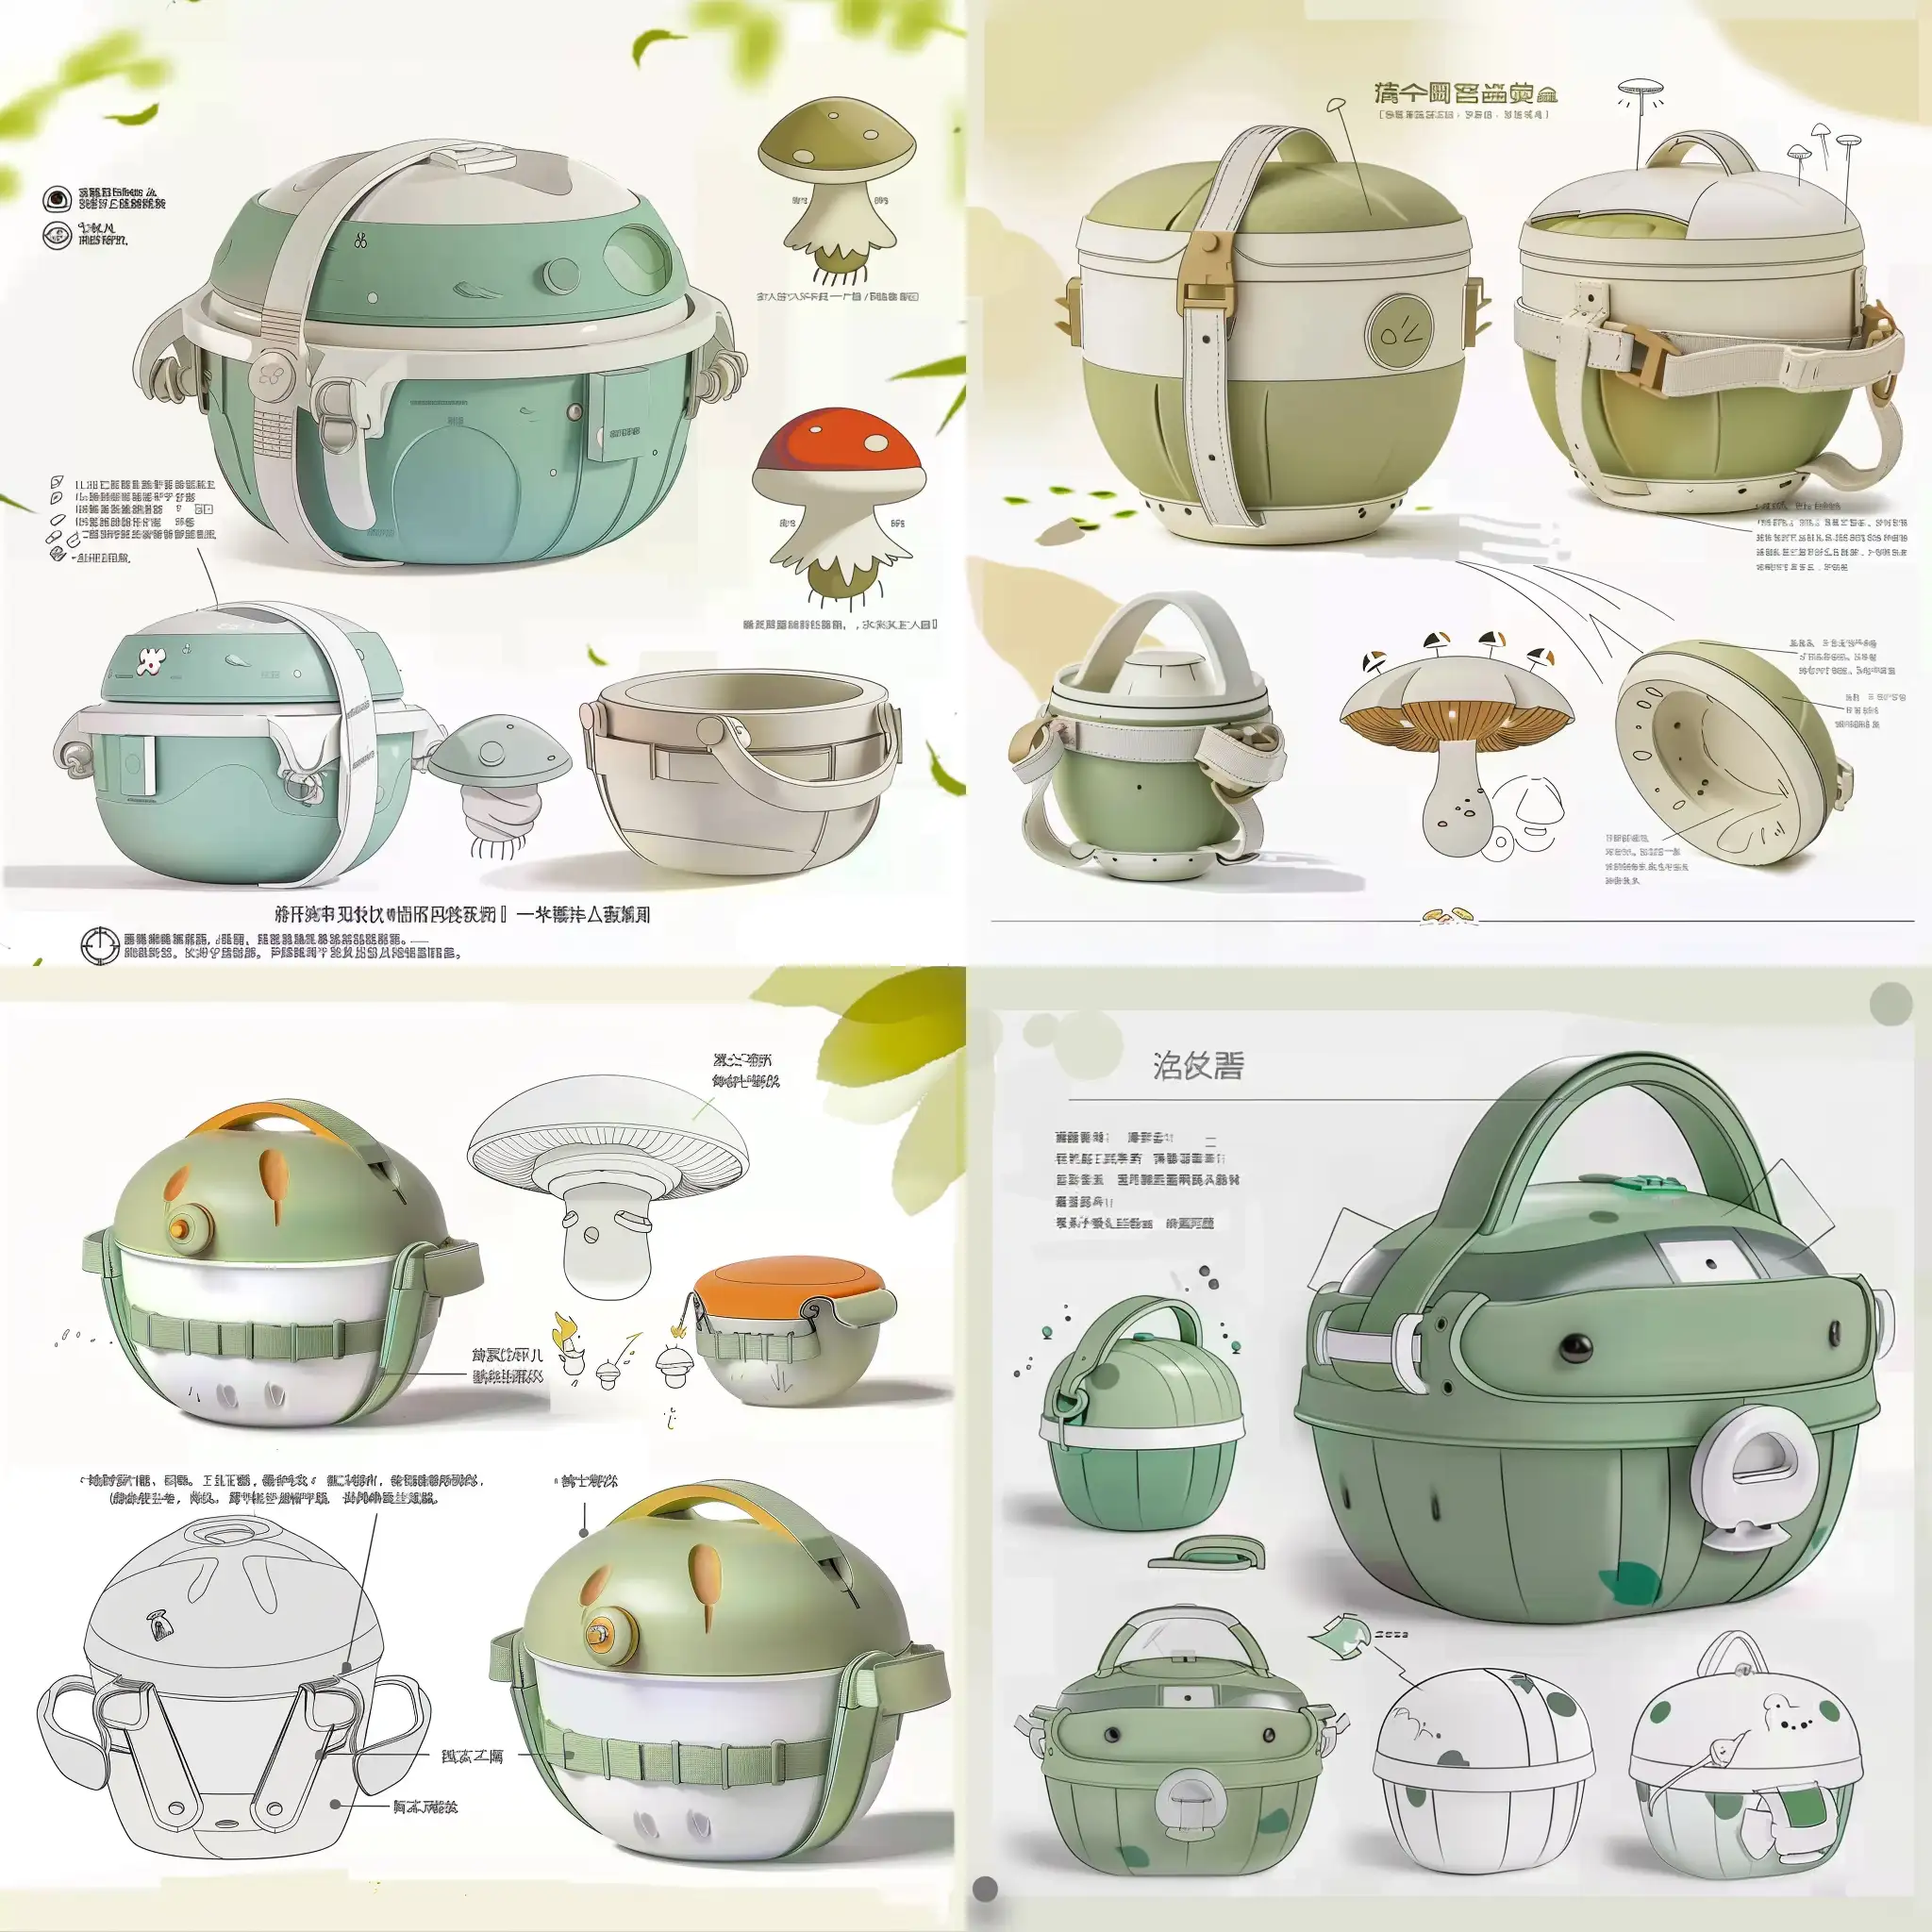 Childrens-Waterflood-Insulation-Bowl-Design-Sketch-Small-Cute-Portable